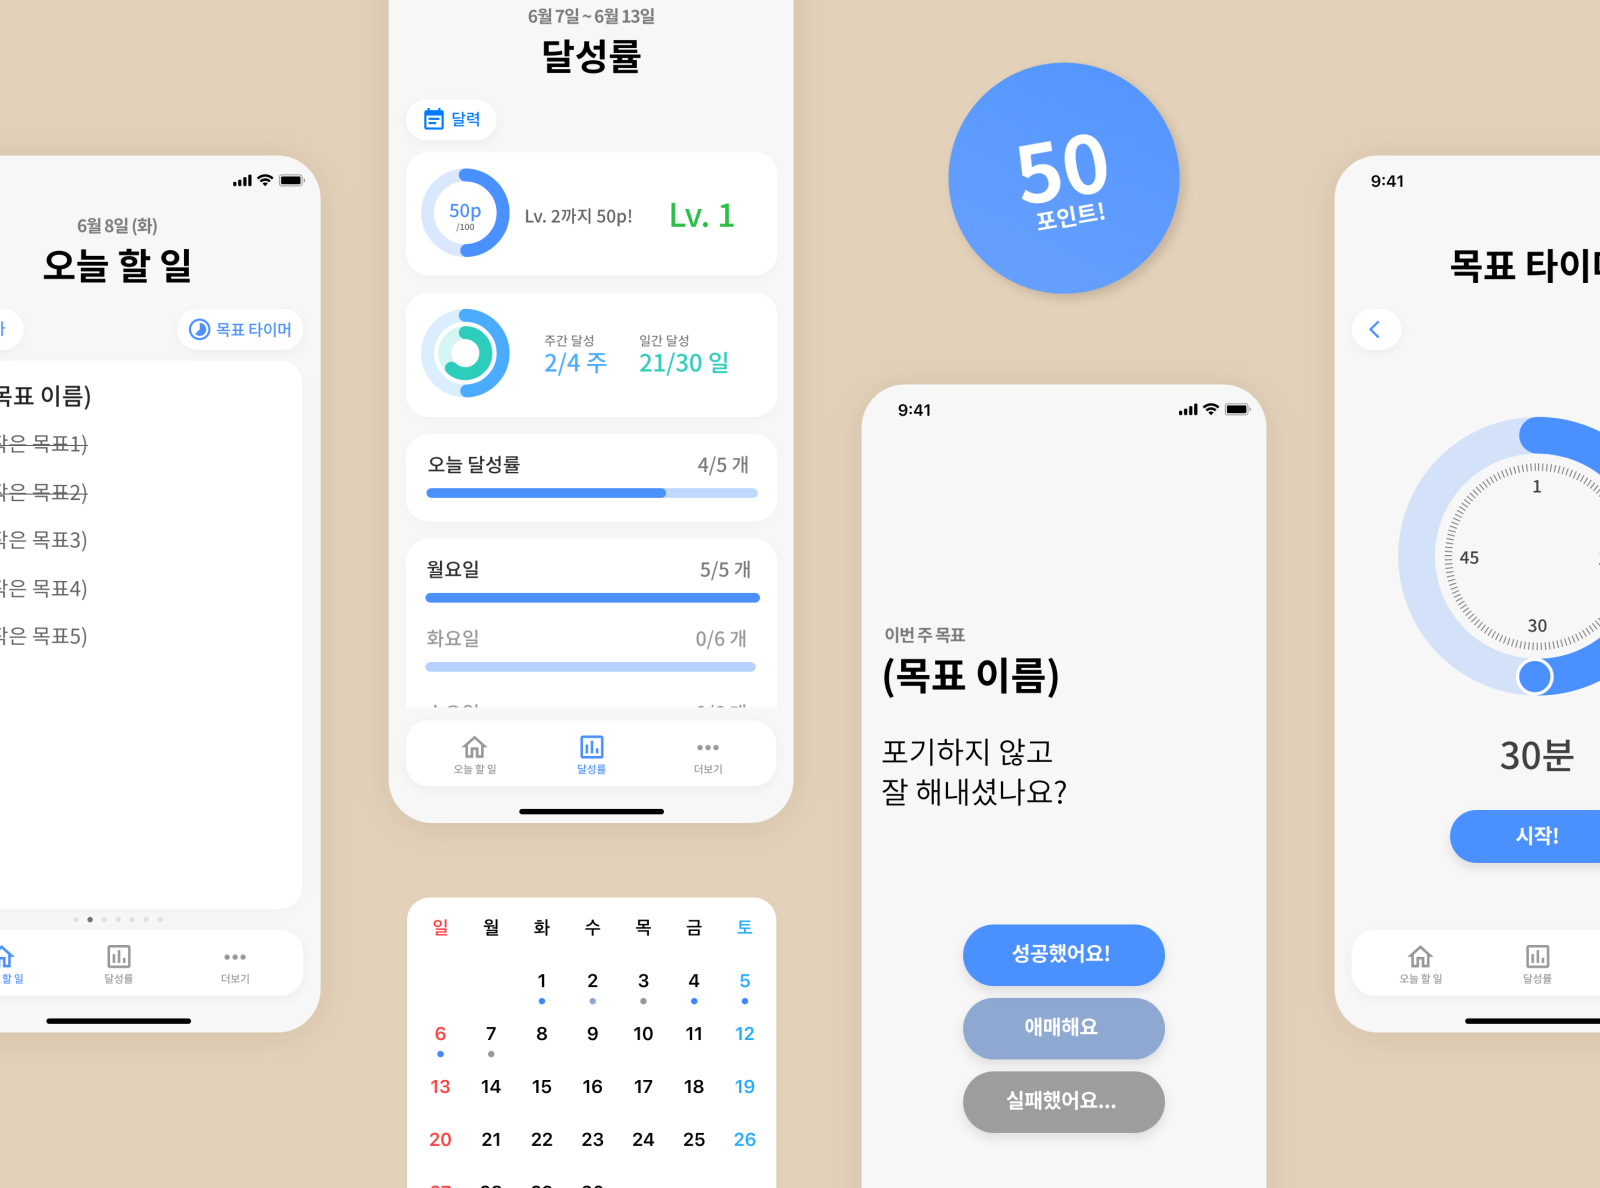 Goal Tracking App Design by Jaehan Lee on Dribbble